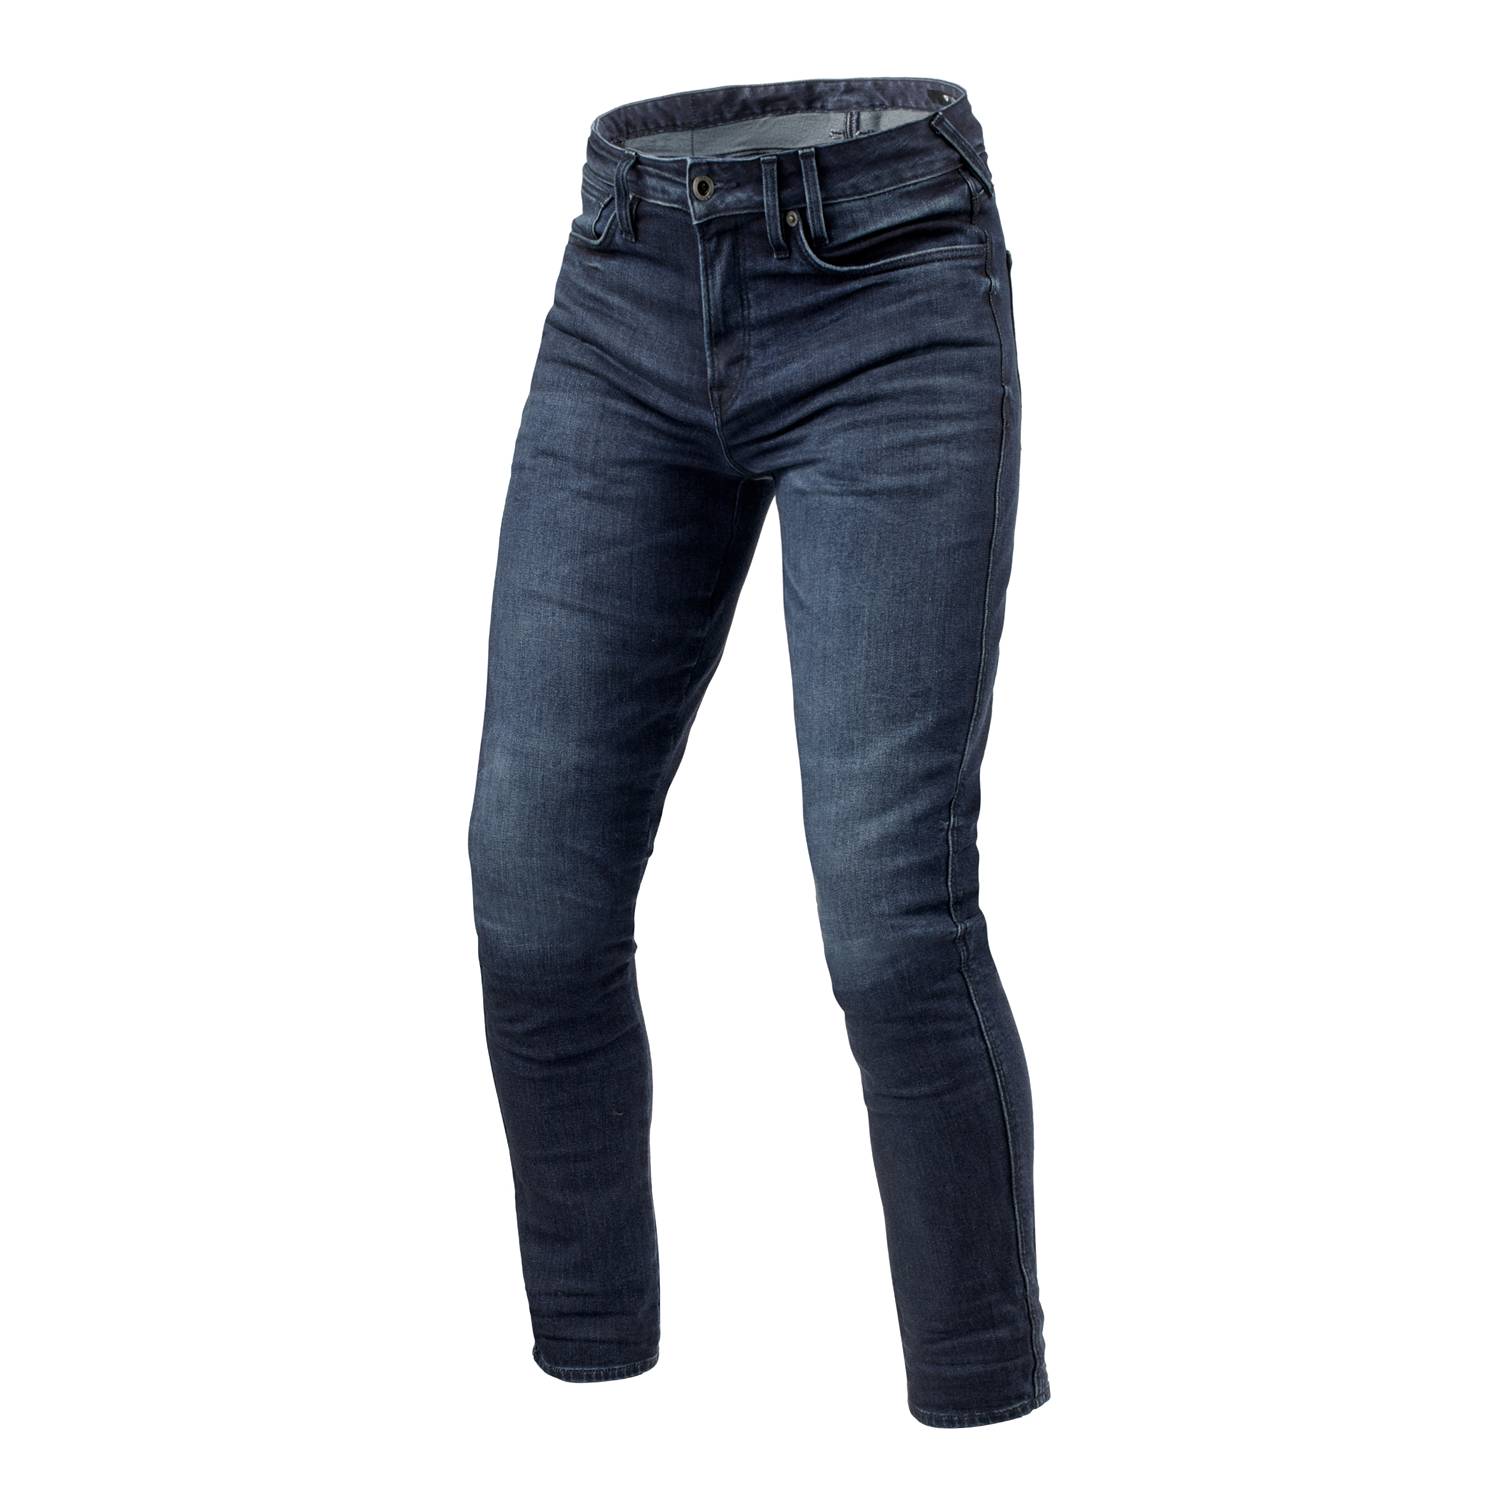 Image of REV'IT! Jeans Carlin SK Dark Blue Used L36 Motorcycle Jeans Größe L36/W33